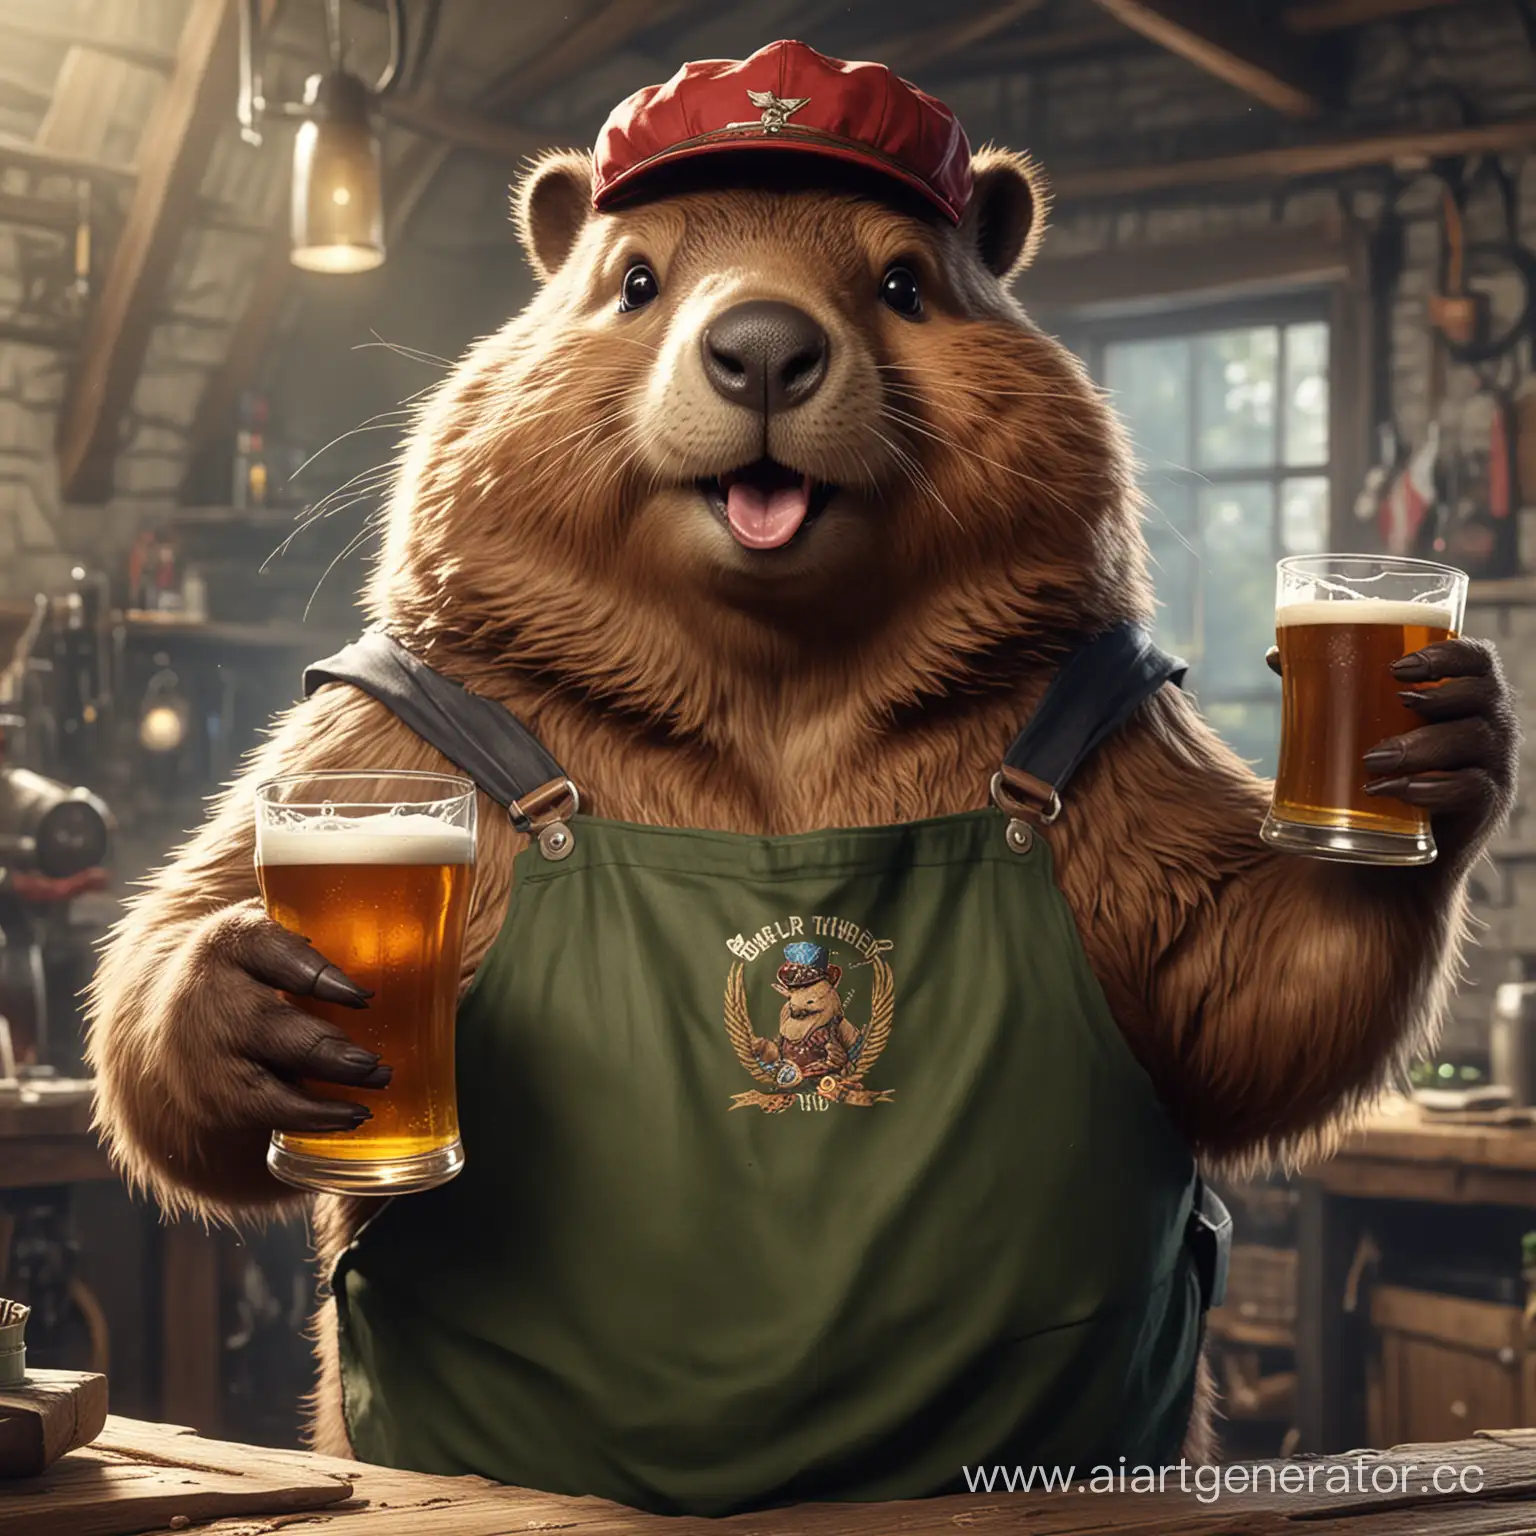 Playful-Beaver-Enjoying-War-Thunder-Game-Night-with-a-Beer